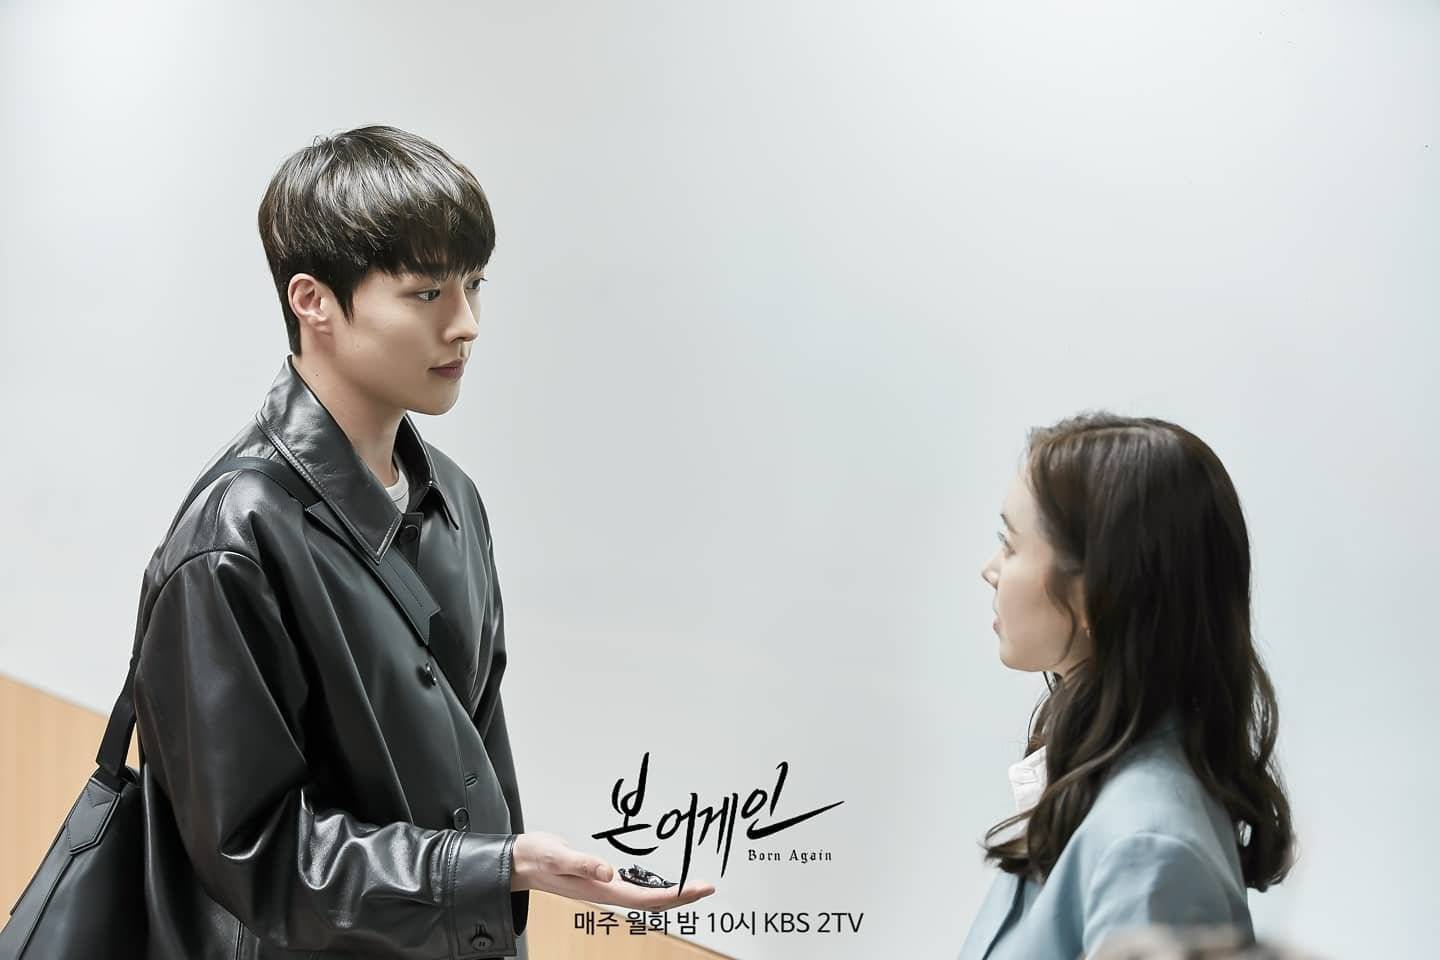 [Photos] New Stills Added for the Korean Drama 